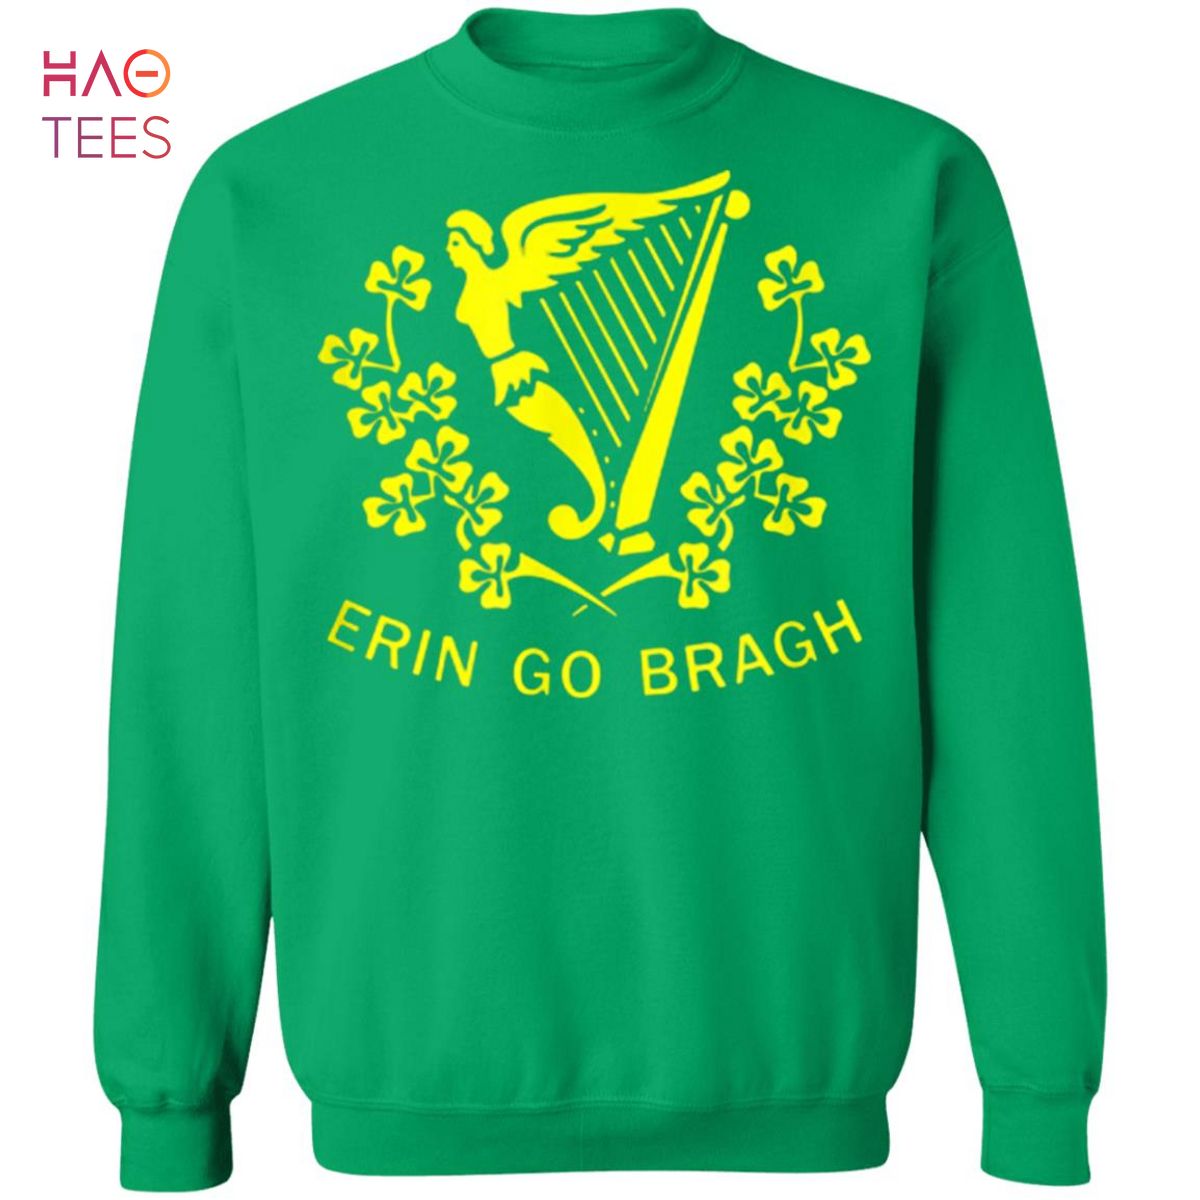 HOT Erin Go Bragh Sweater